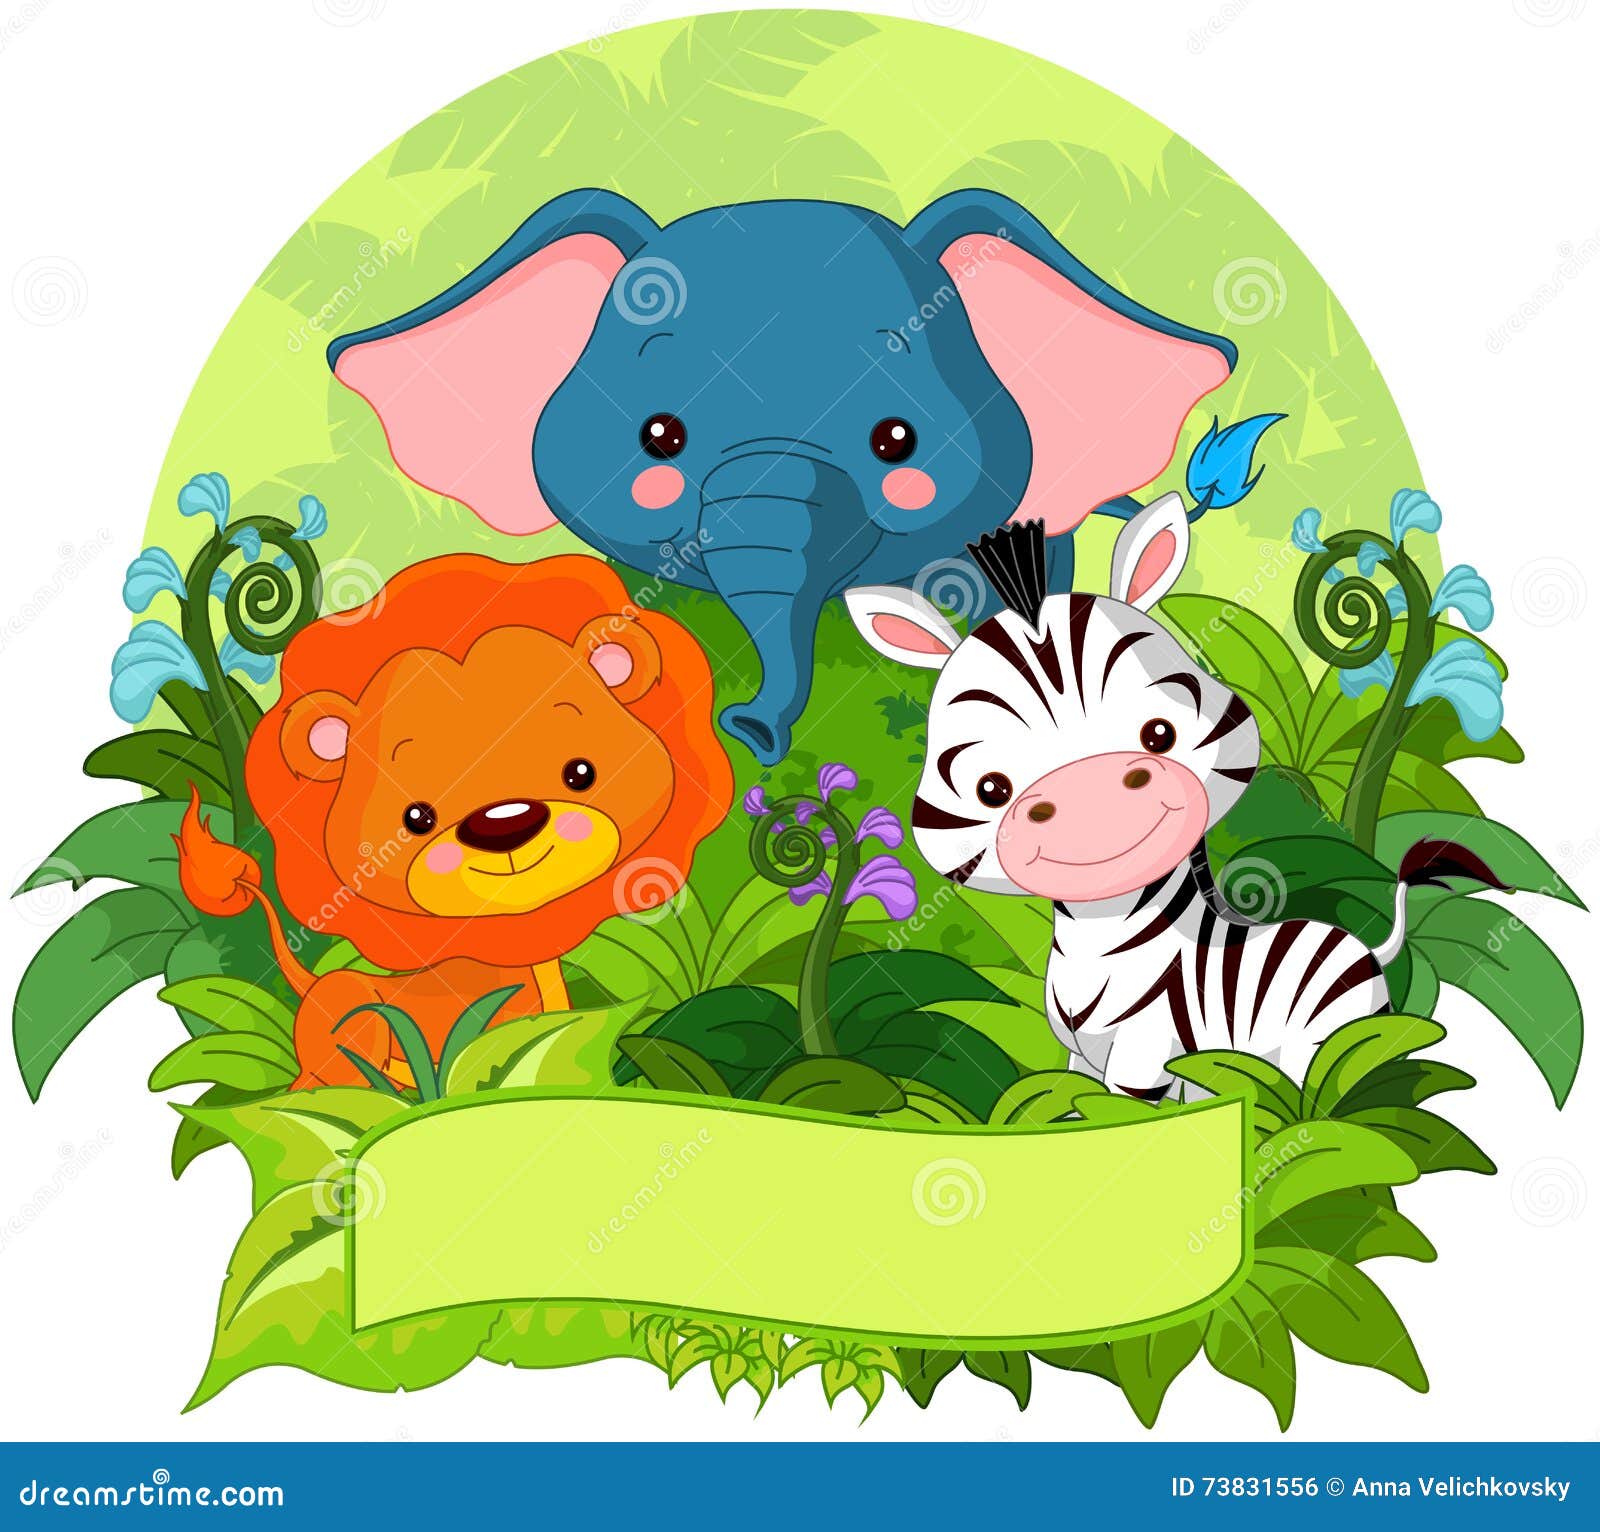 Jungle Animals stock vector. Illustration of safari, text - 73831556